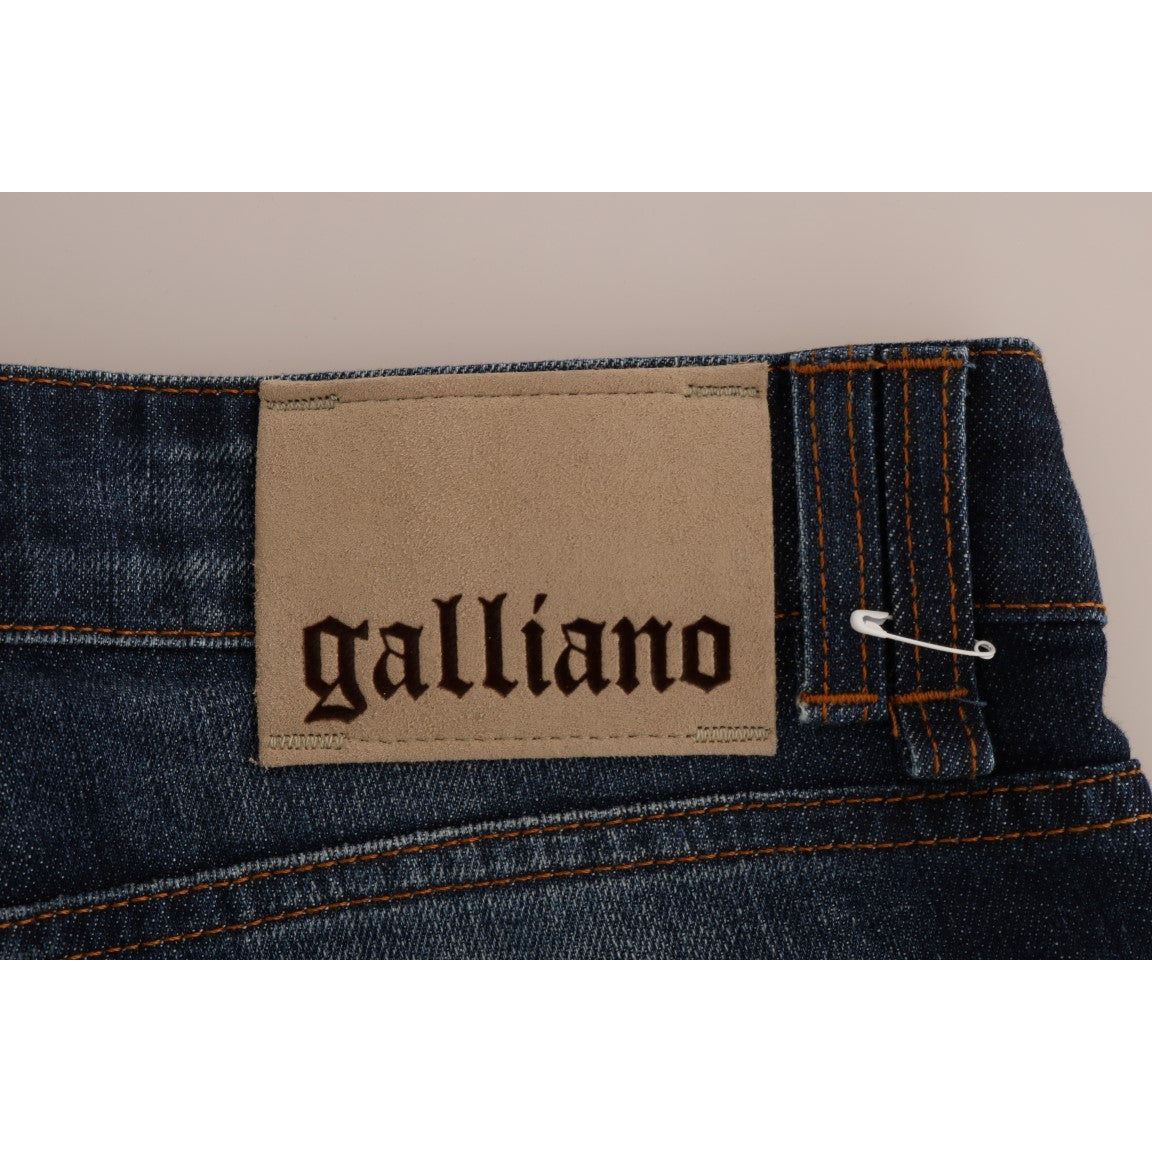 John Galliano Stylish Skinny Low Rise Denim Jeans blue-wash-cotton-stretch-skinny-low-jeans 490796-blue-wash-cotton-stretch-skinny-low-jeans-6.jpg